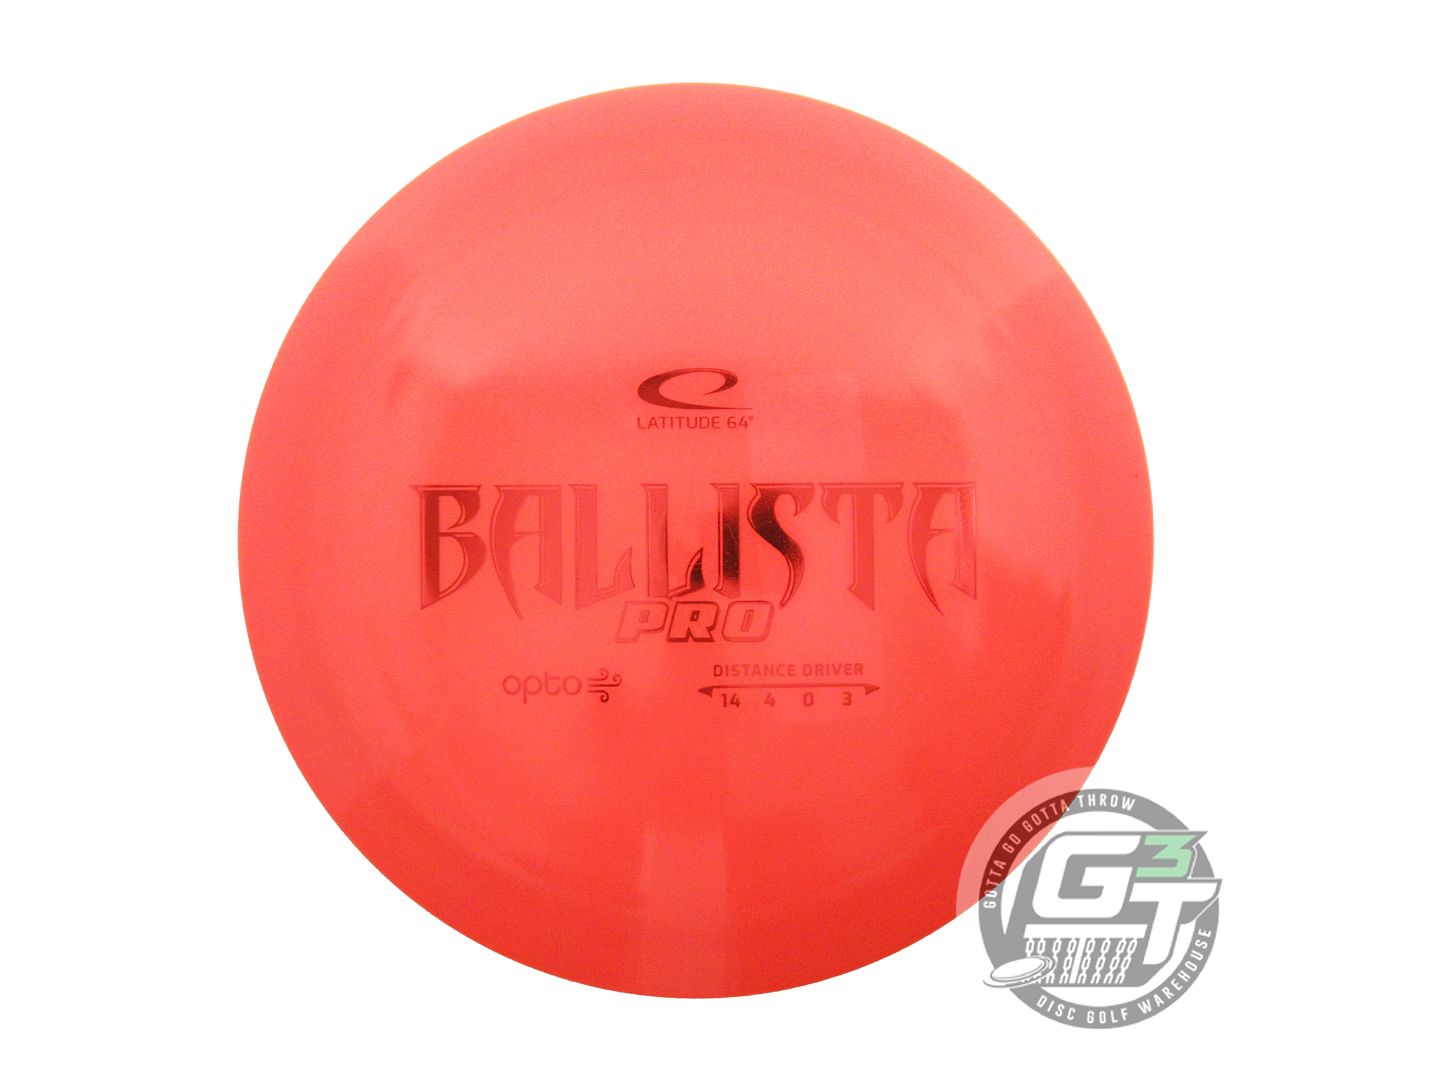 Latitude 64 Opto AIR Ballista Pro Distance Driver Golf Disc (Individually Listed)